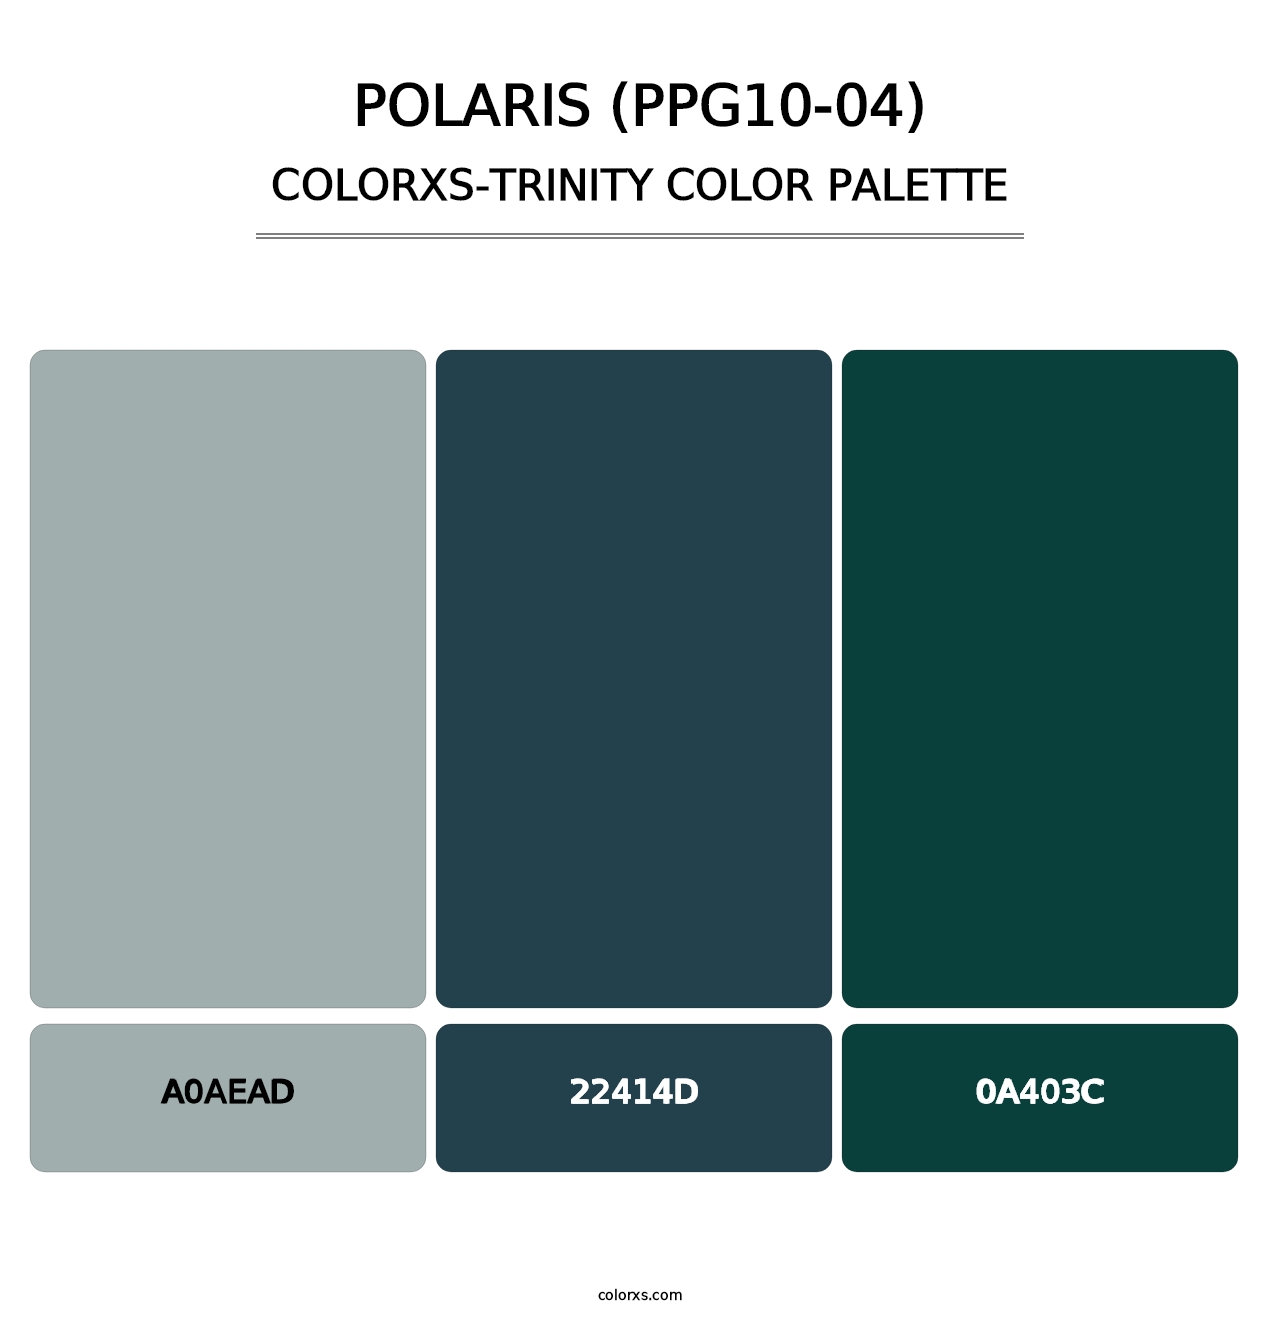 Polaris (PPG10-04) - Colorxs Trinity Palette